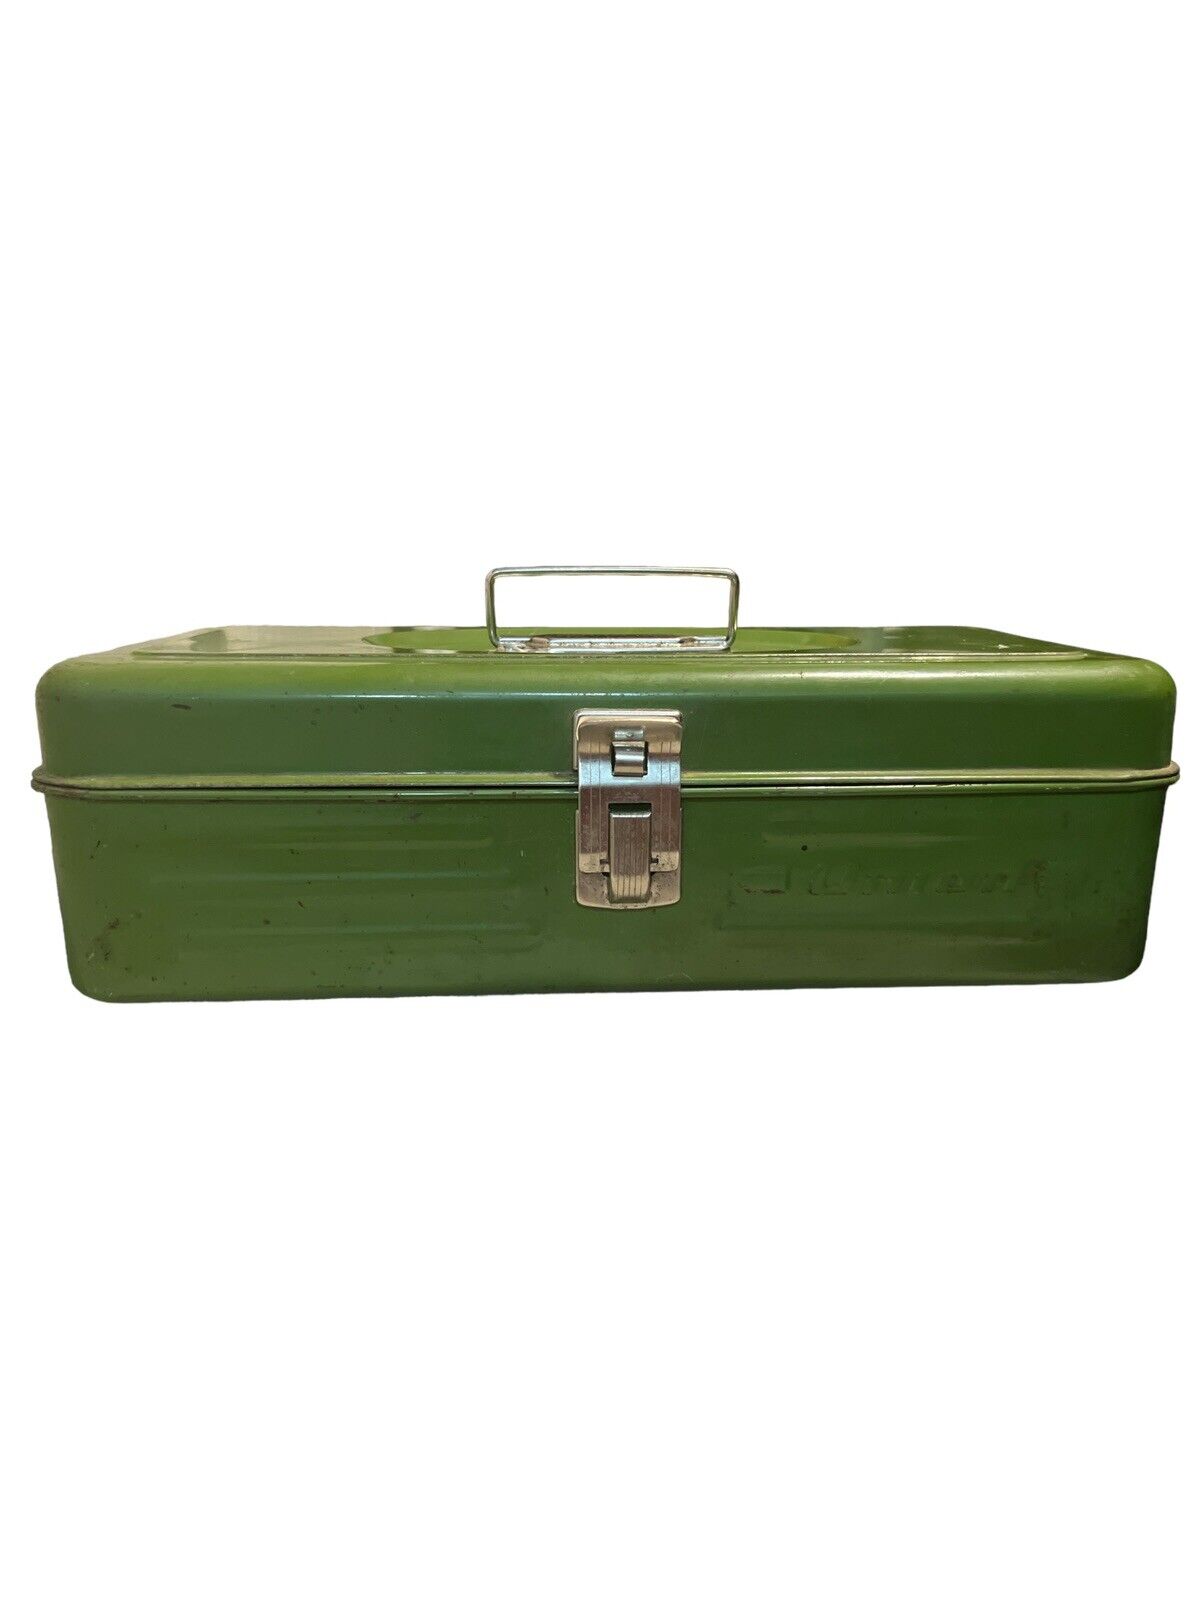 Vintage Union Green Metal Tool Utility Box Model 4011  Storage Box w/tray